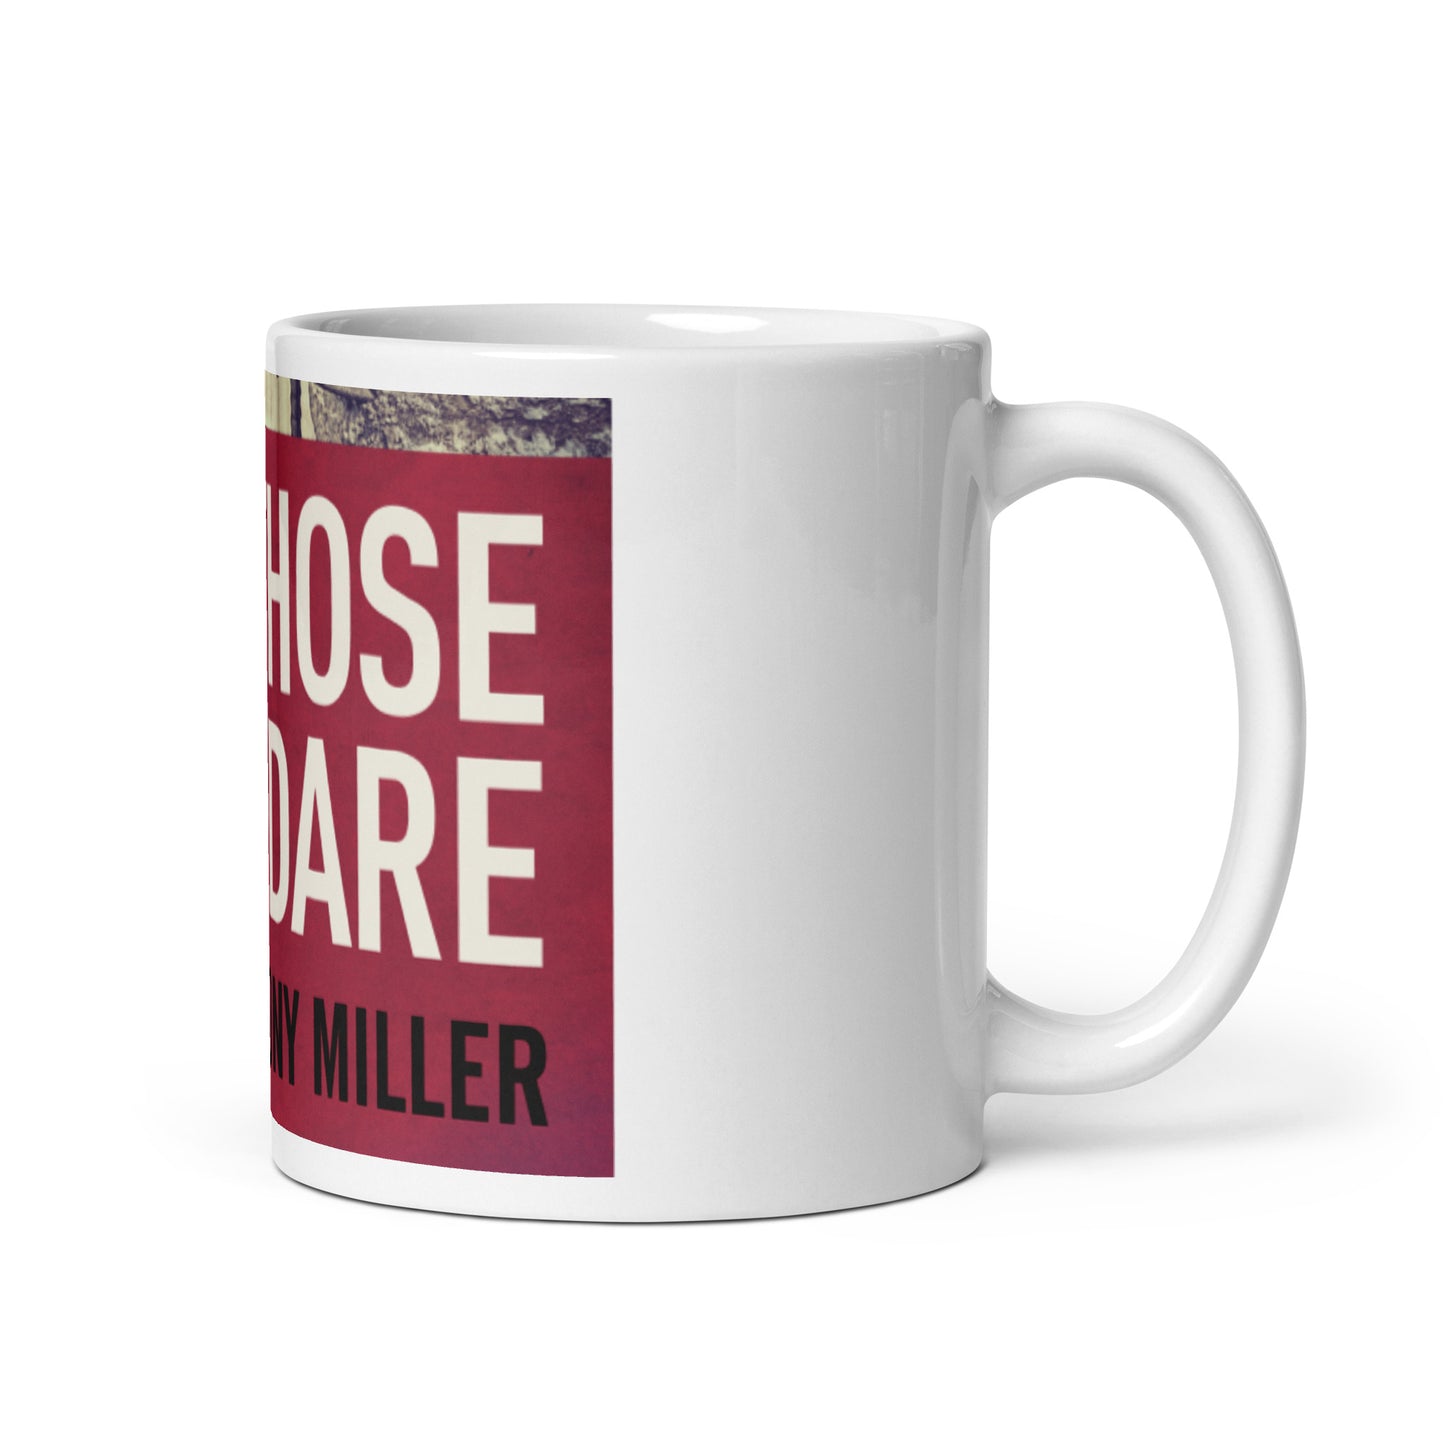 For Those Who Dare - White Coffee Mug